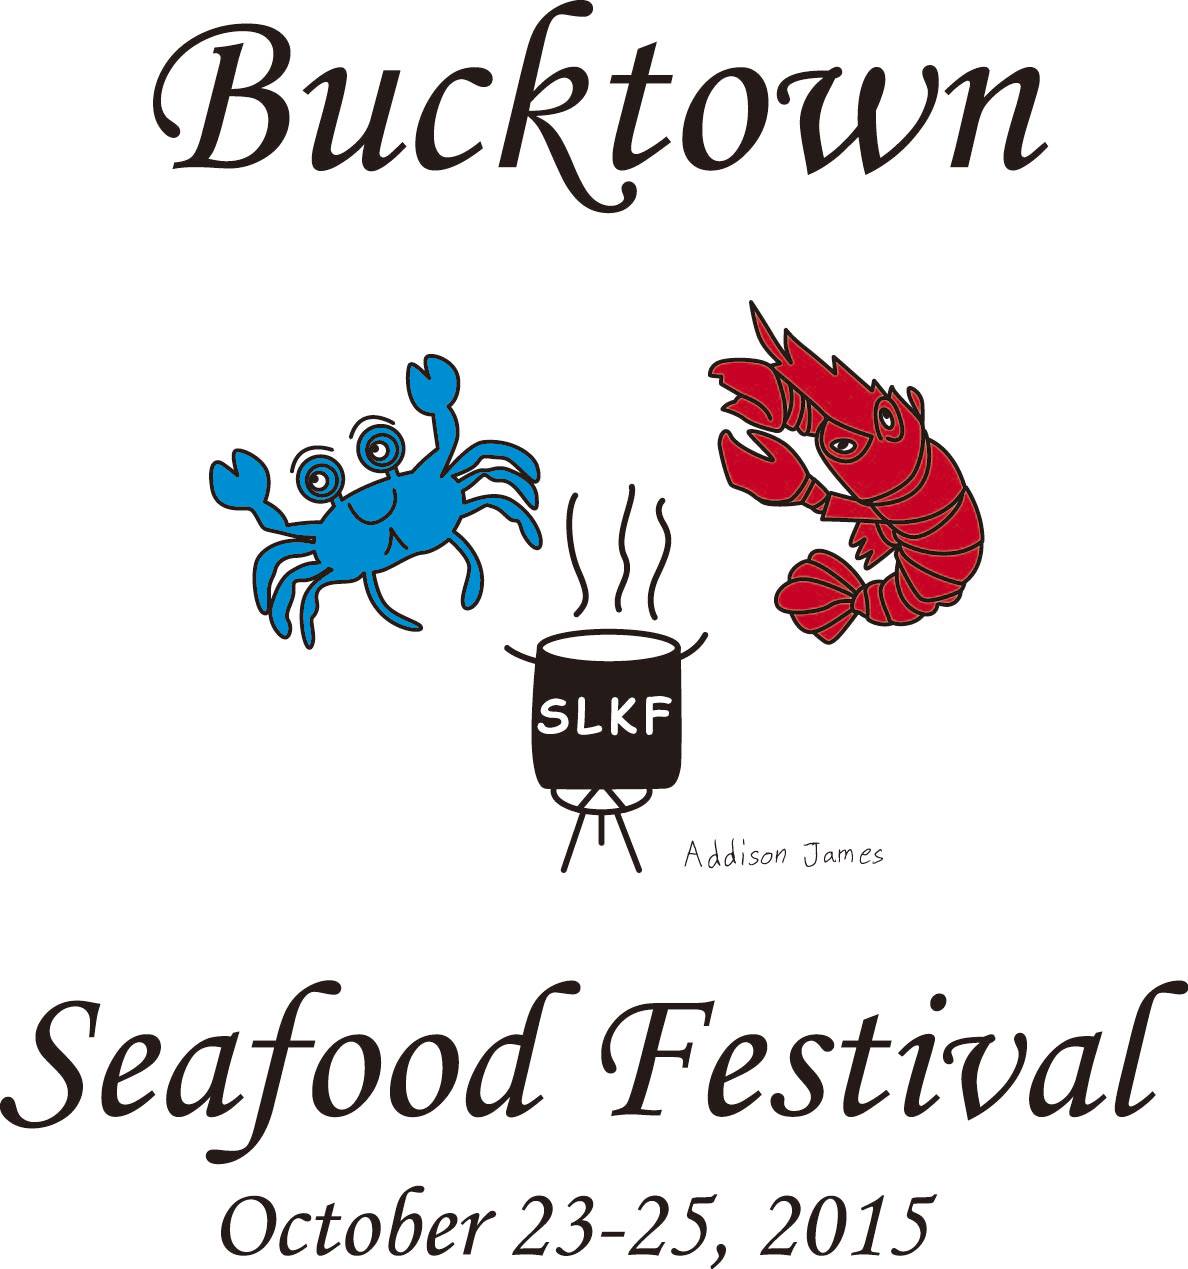 Bucktown Seafood Festival October 23 through 25